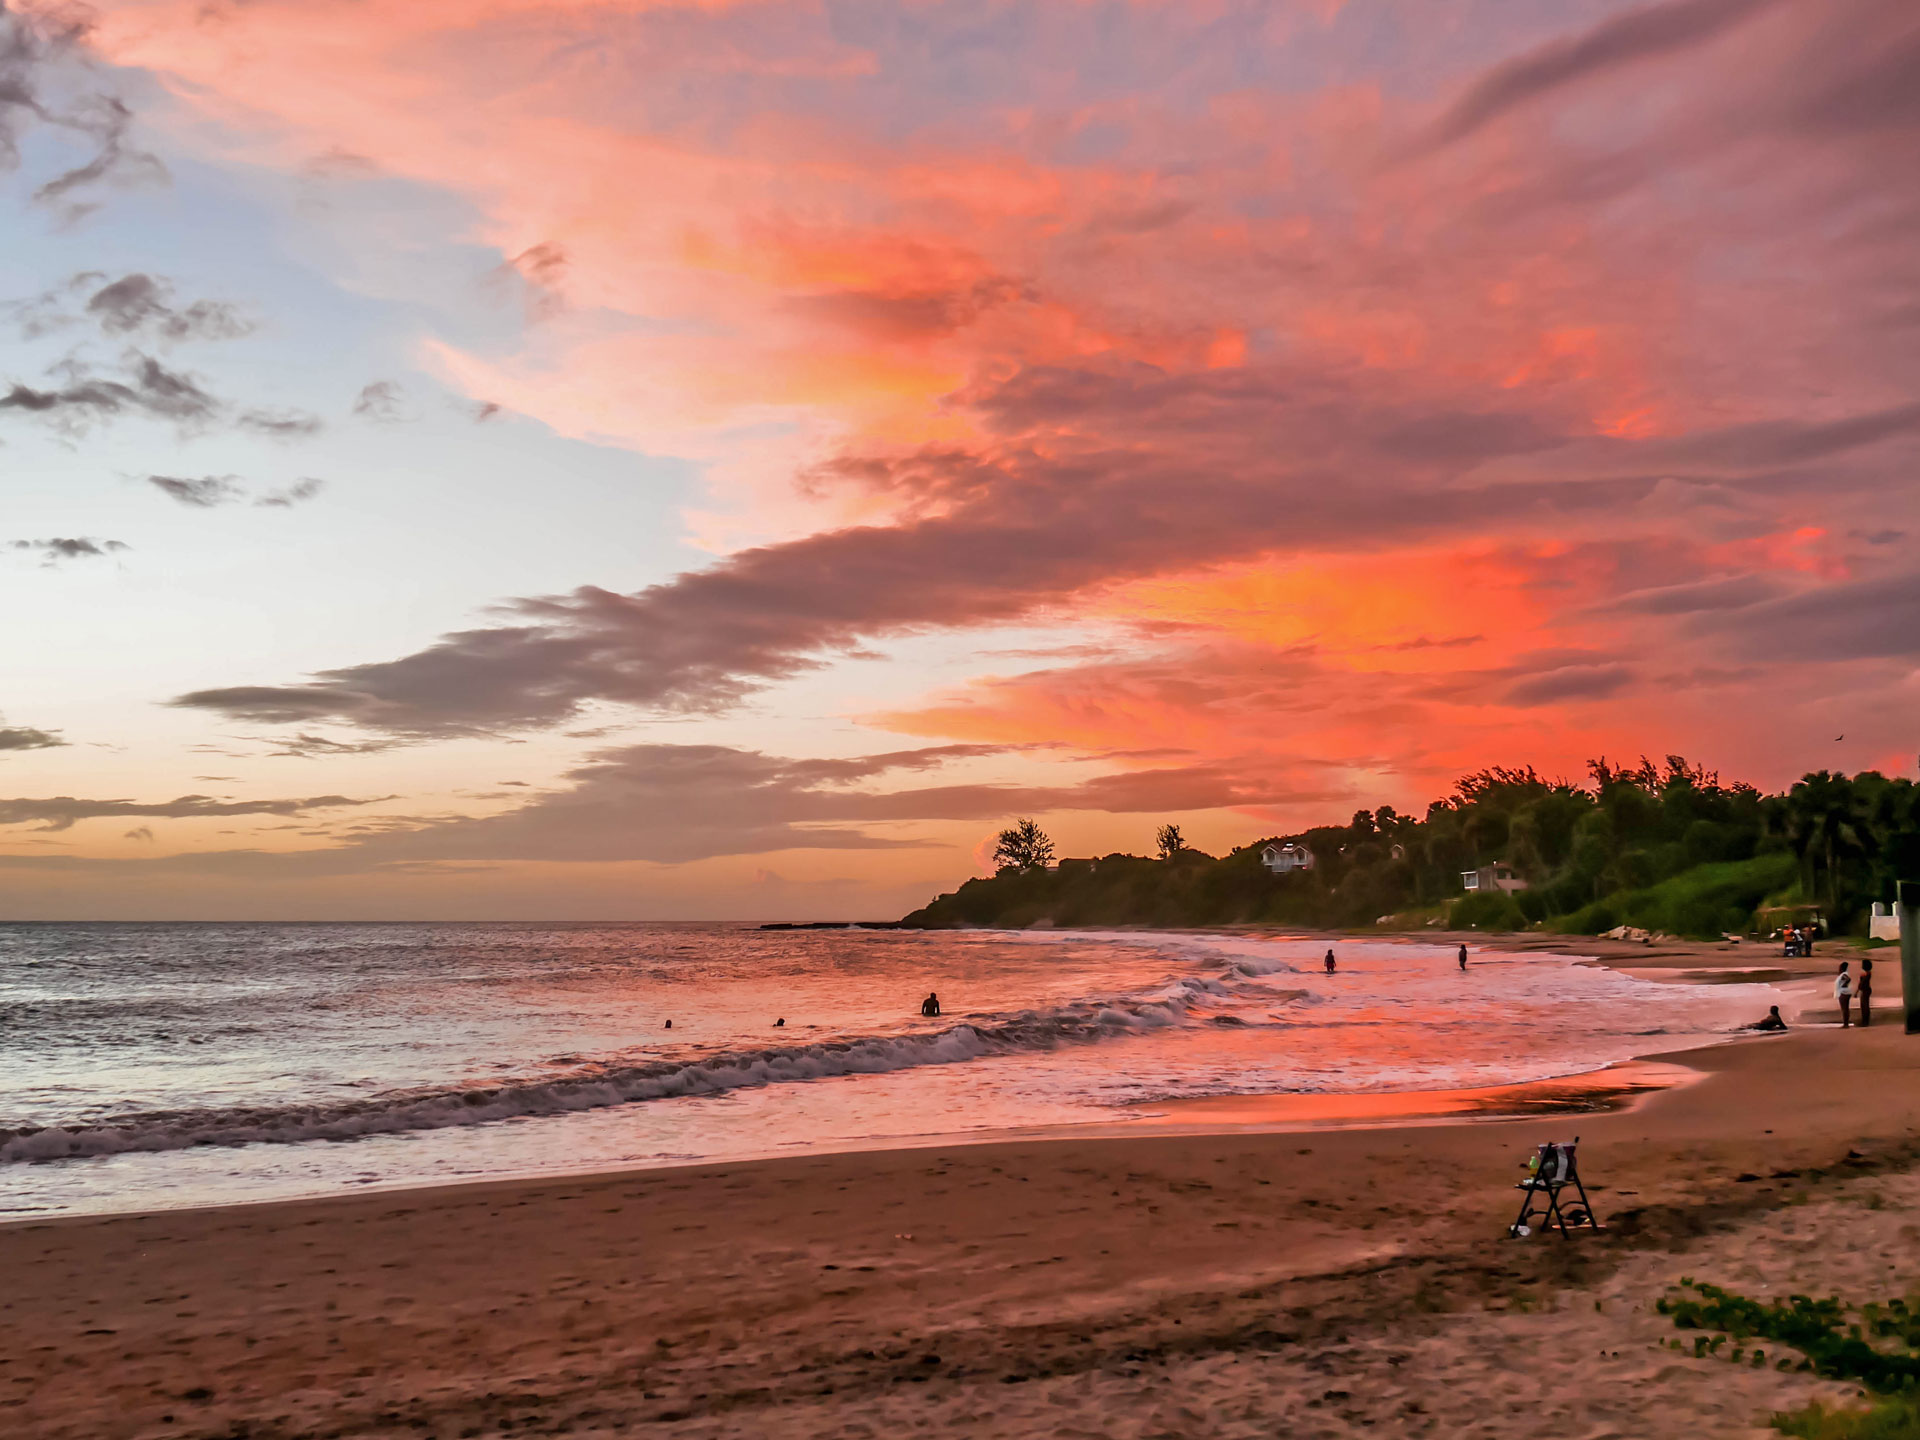 Red and orange sunset sky over Treasure Beach, Jamaica